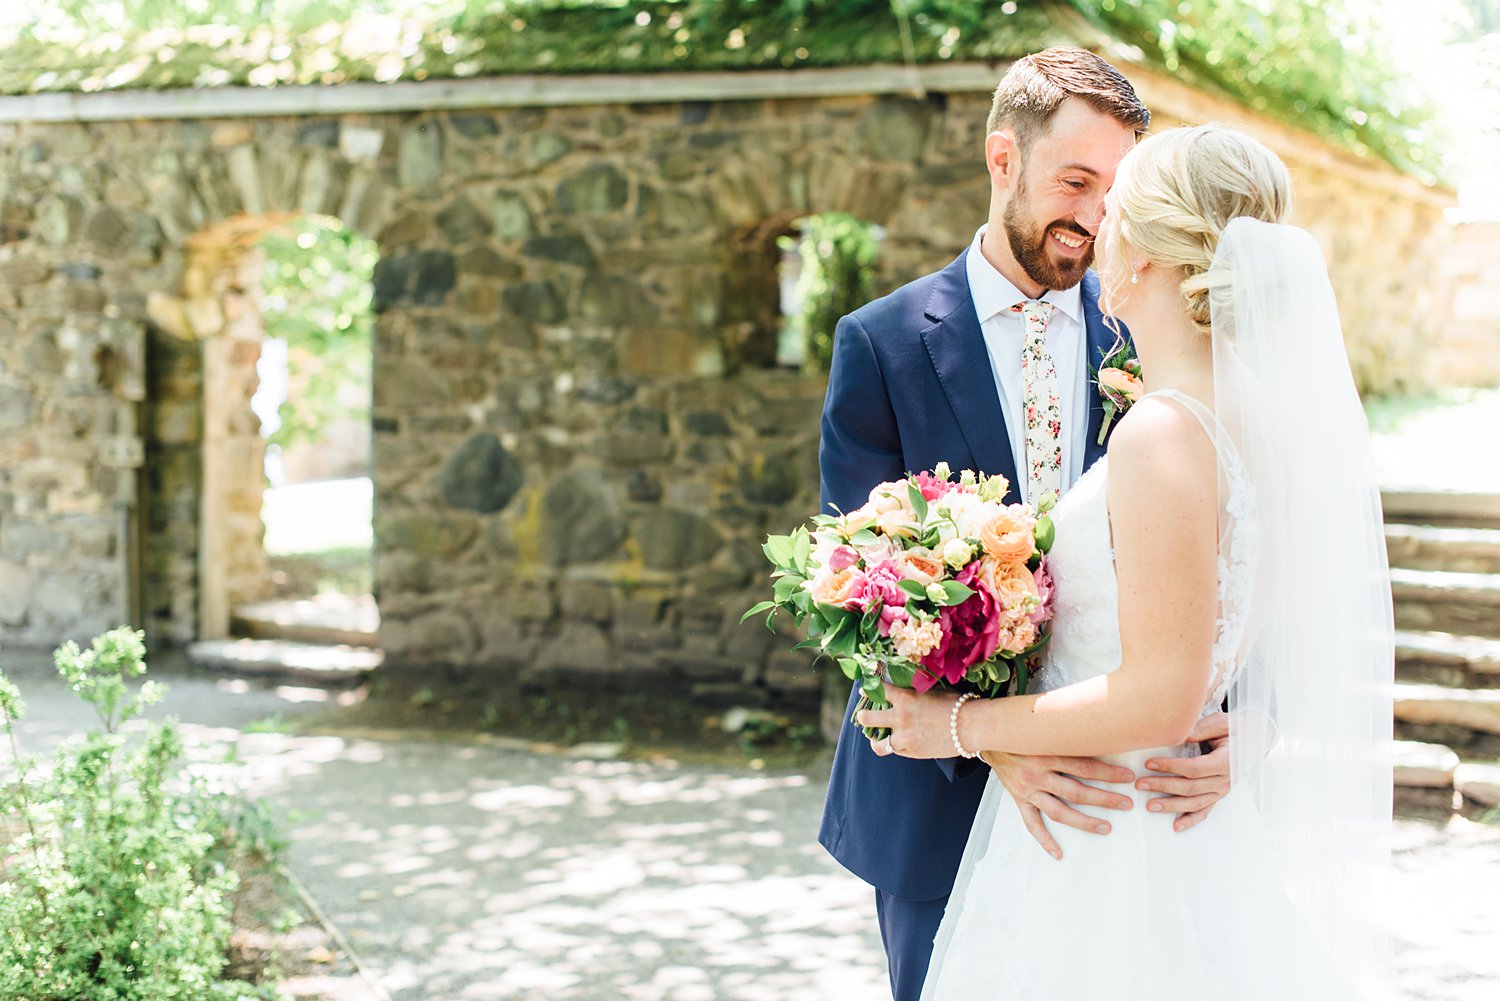 Kaitlyn + Tyler - Parque Wedding - Ridley Creek Wedding Photographer - Alison Dunn Photography photo